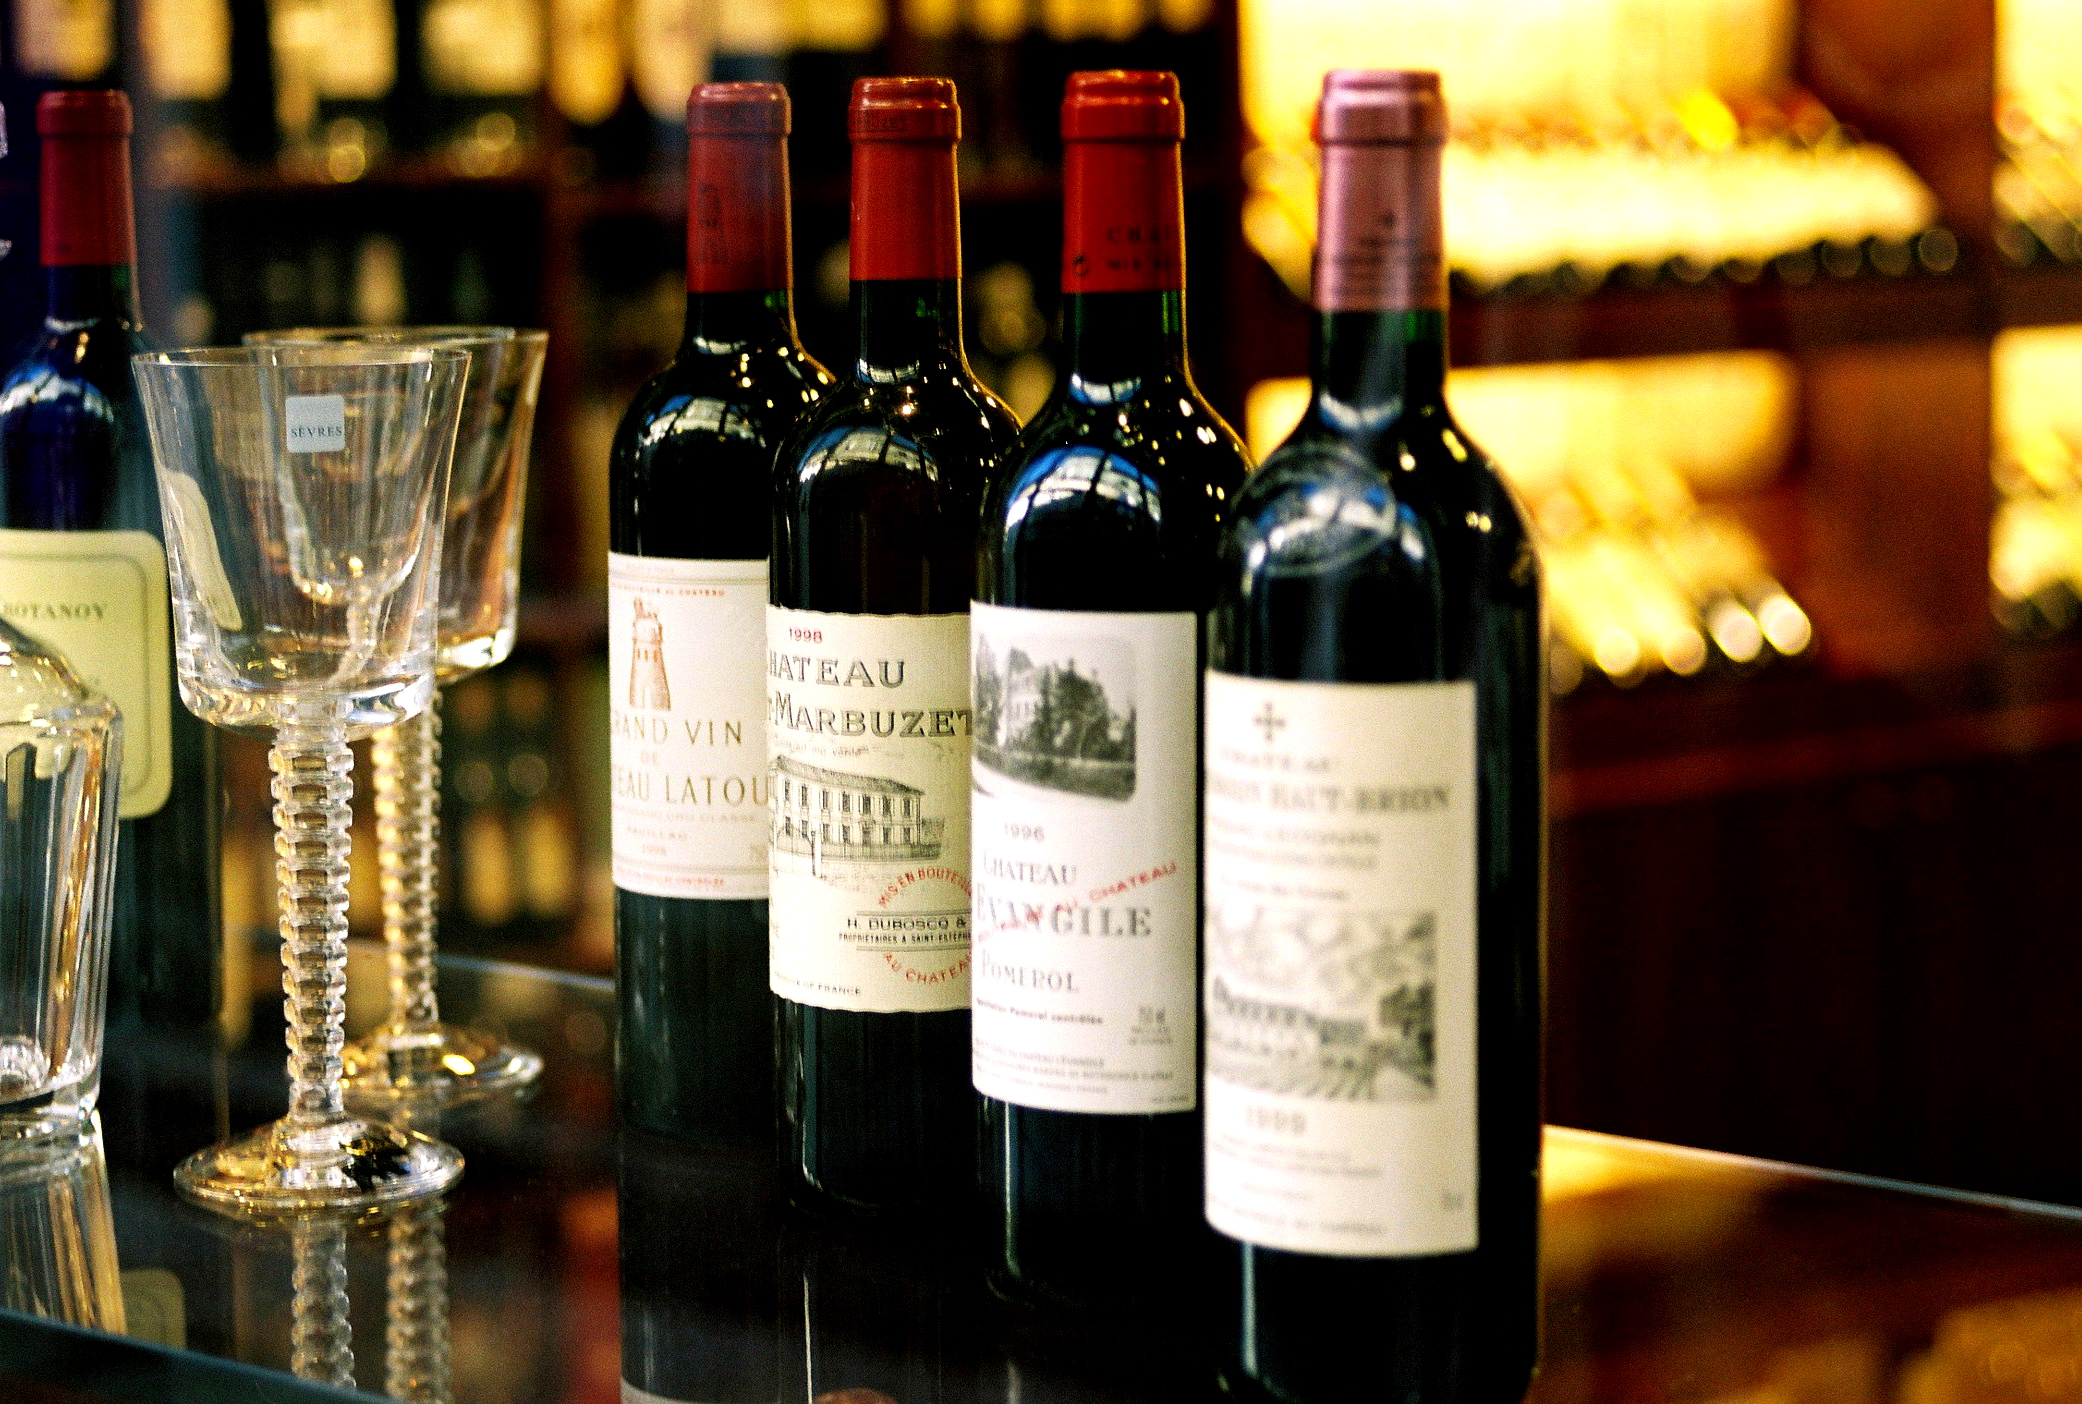 Bordeaux - Chateaux, Rivers, and Wine